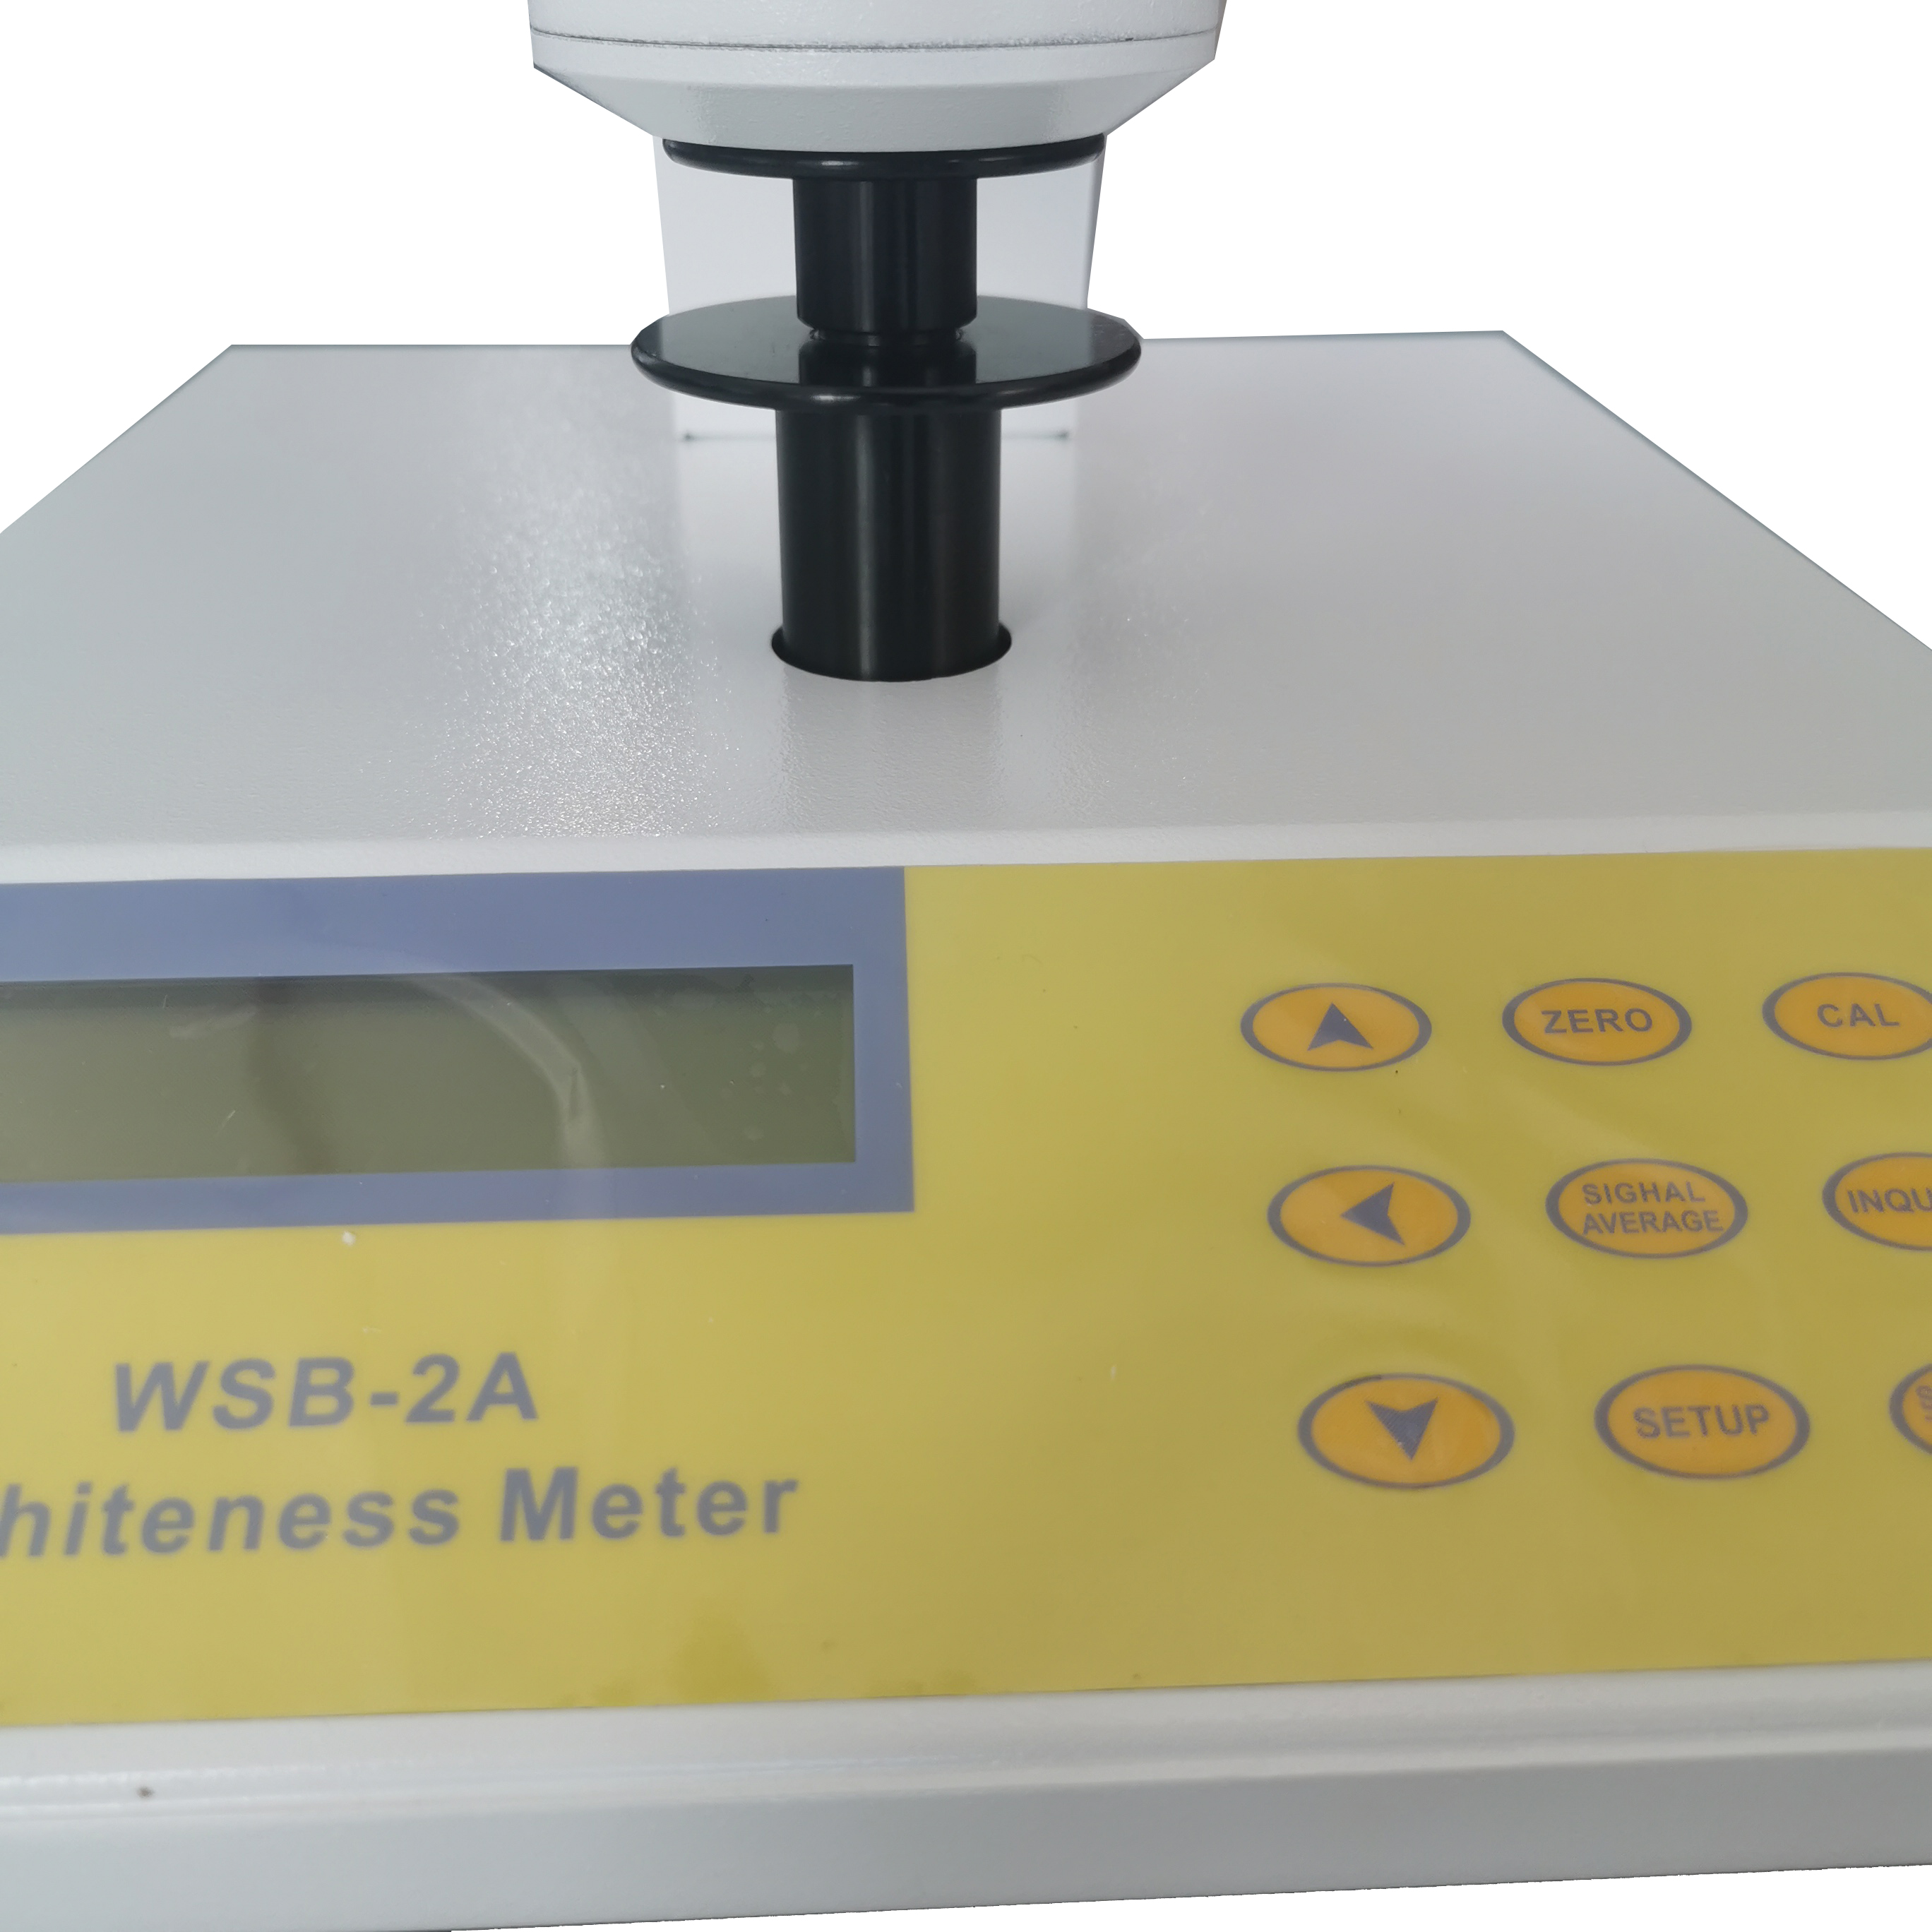 Nade Digital Whiteness Meter WSB-2A